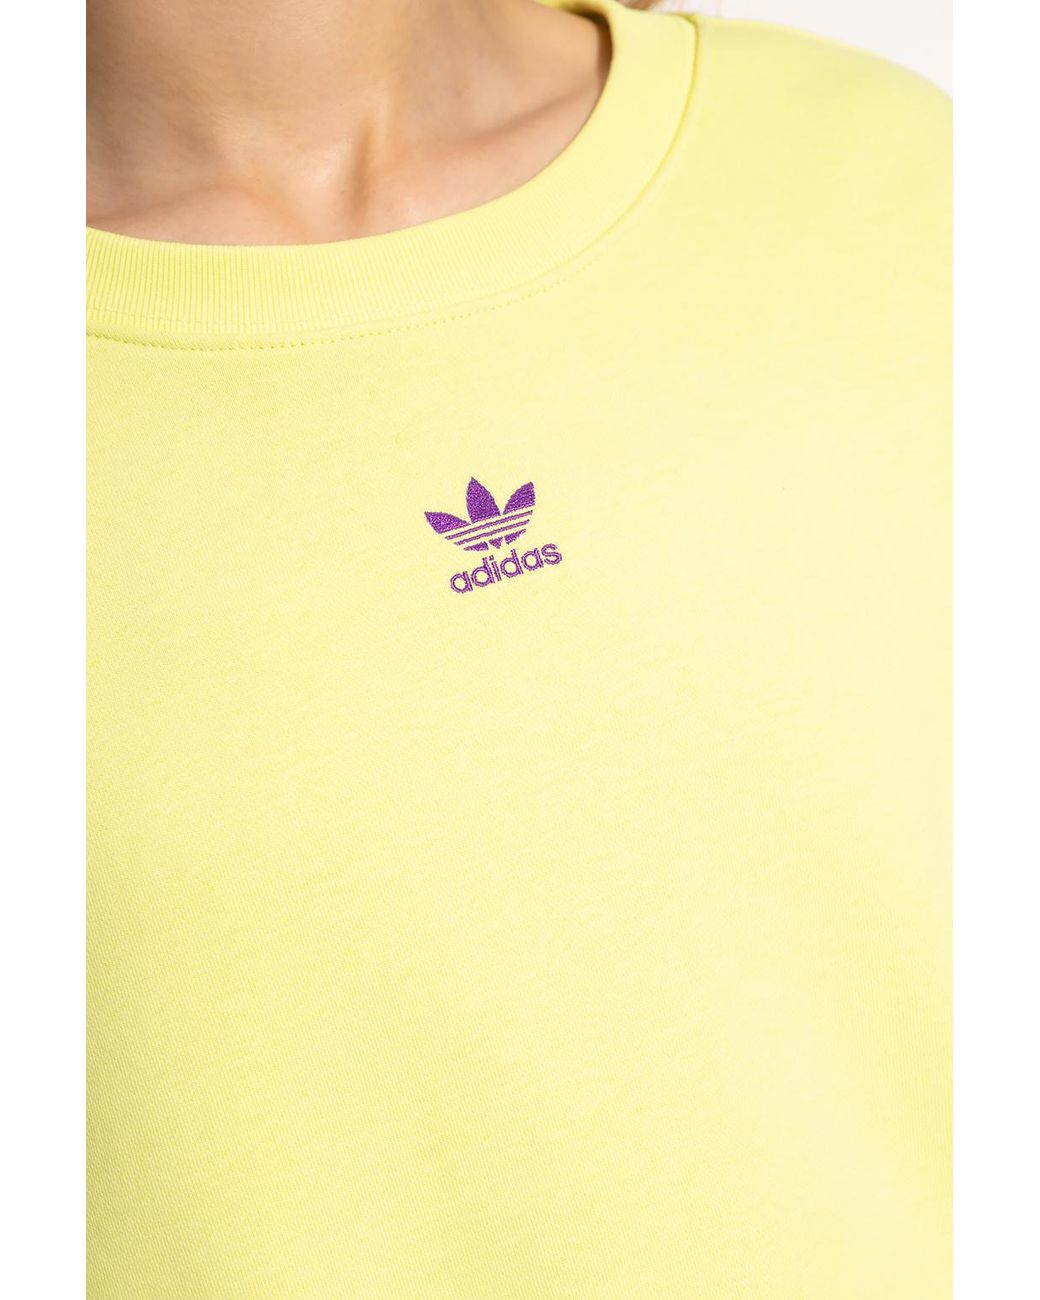 adidas Originals Cotton Sweatshirt With Logo in Neon (Yellow) | Lyst